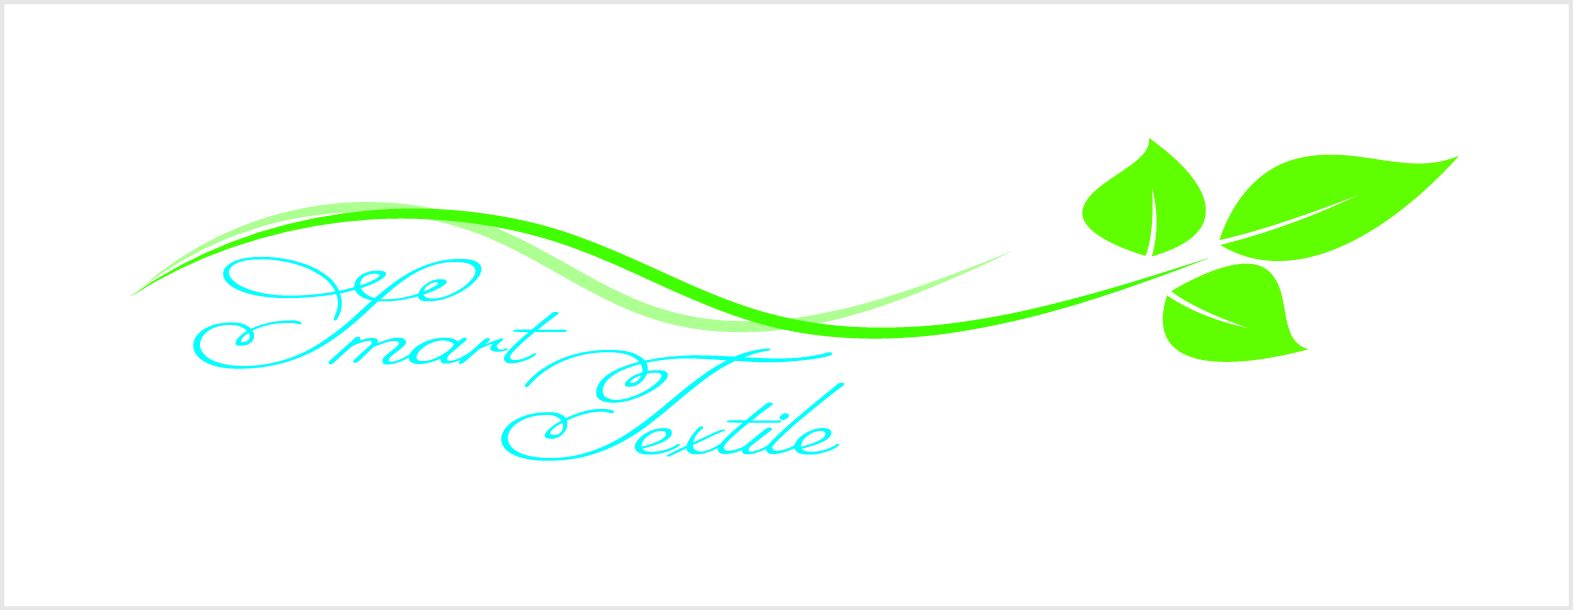 Логотип Smart Textile - дизайнер BELL888